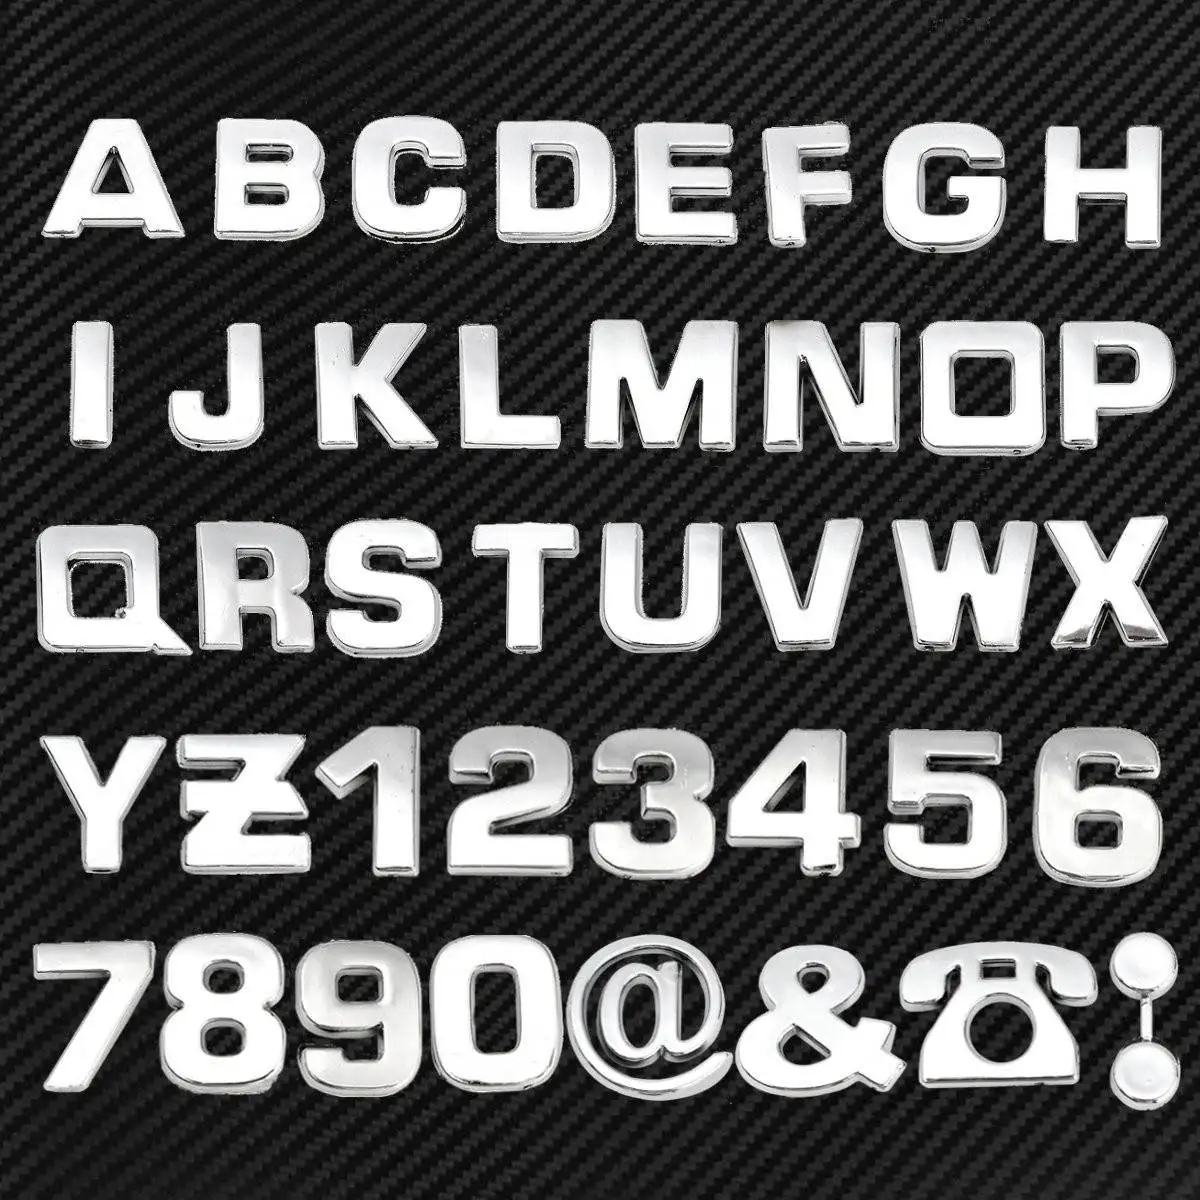 

40Pcs 3D DIY Chrome ABS Metallic Metal Alphabet Letter Number Stickers Car Emblem Letter Badge Symbol Decal Car Styling